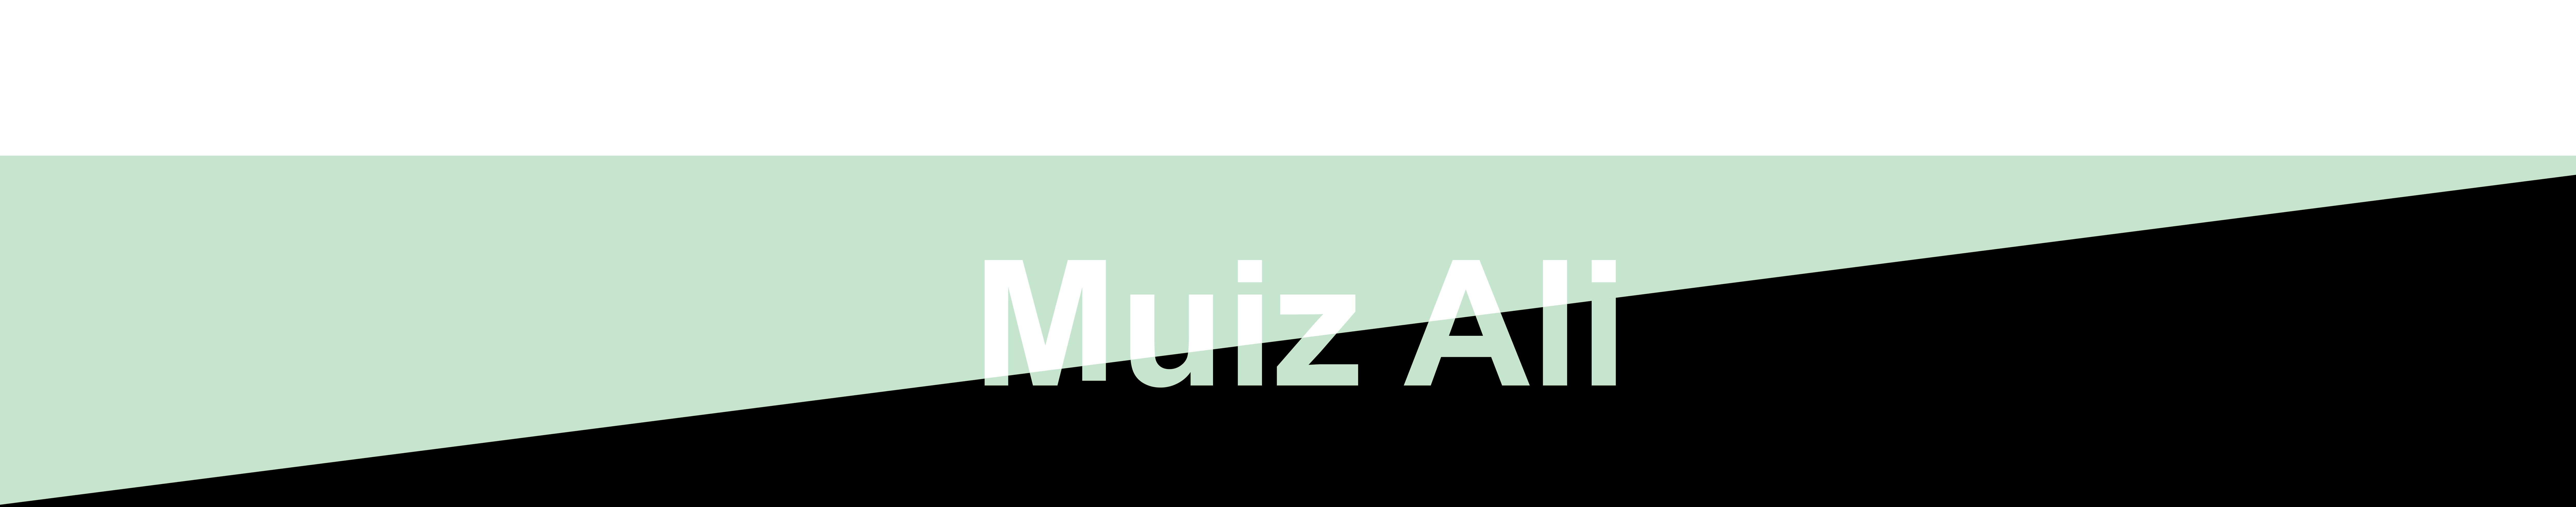 Abdul Muiz Ali's profile banner